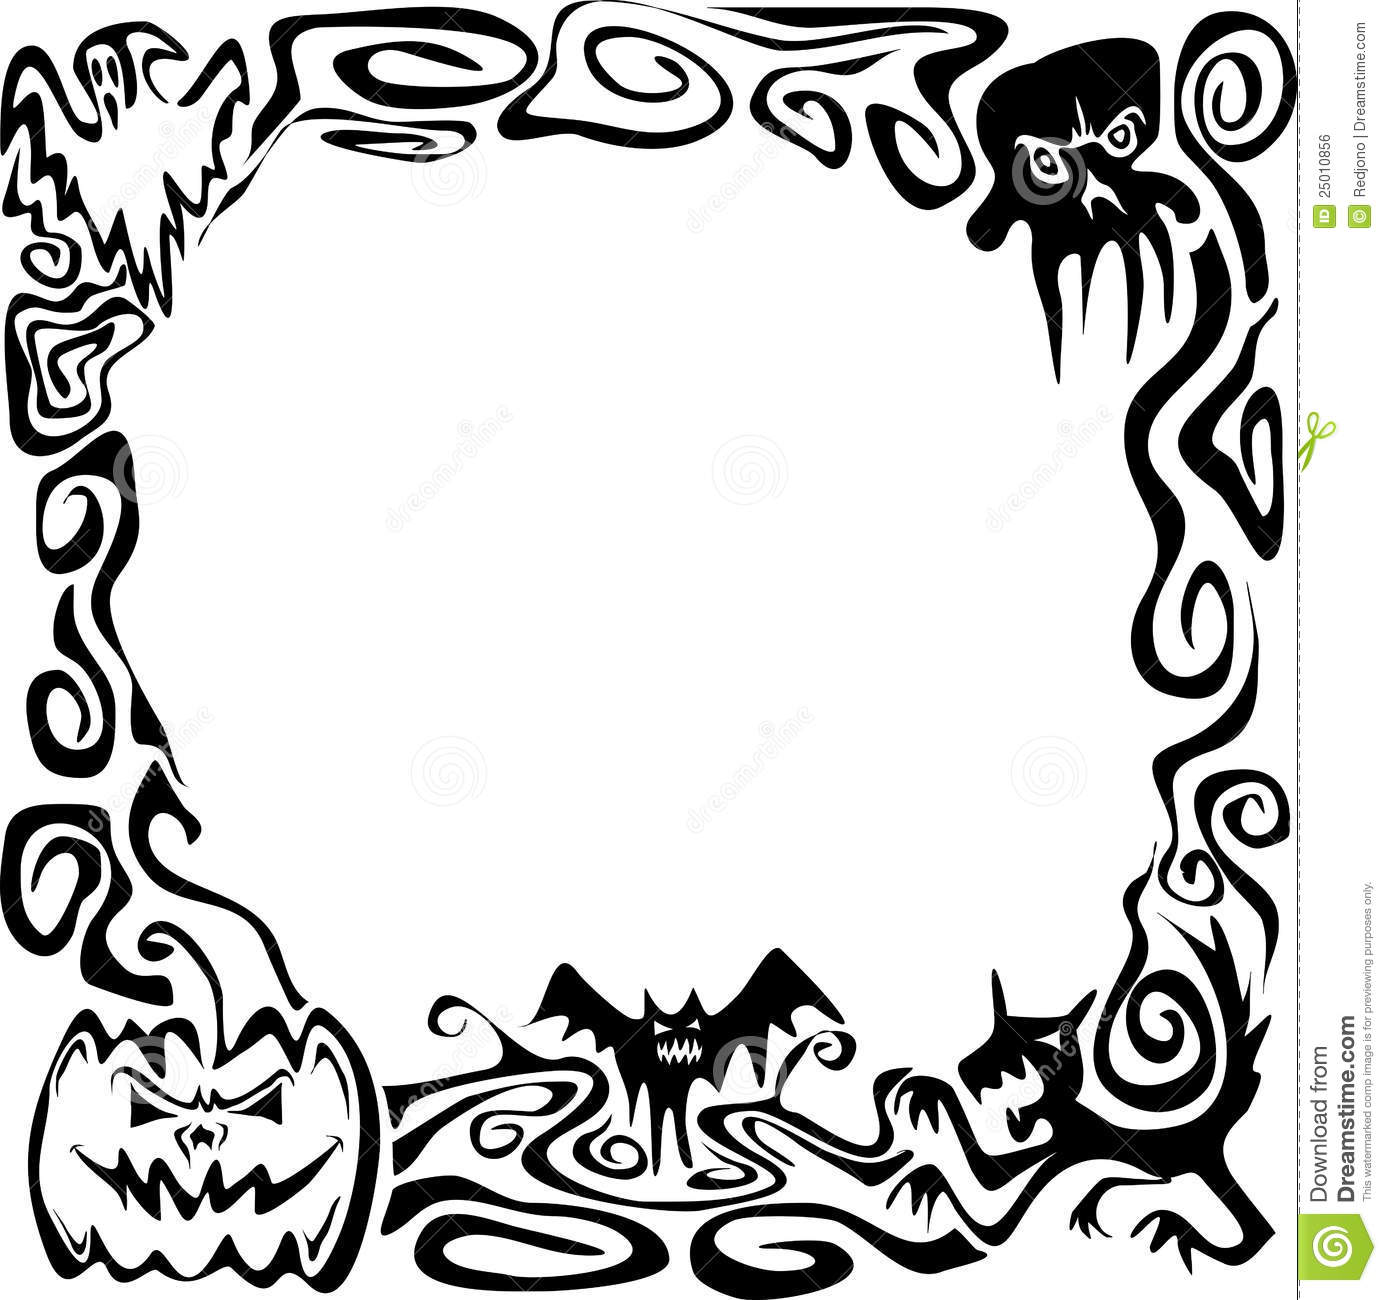 Black And White Halloween Border Clip Art   Clipart Panda   Free